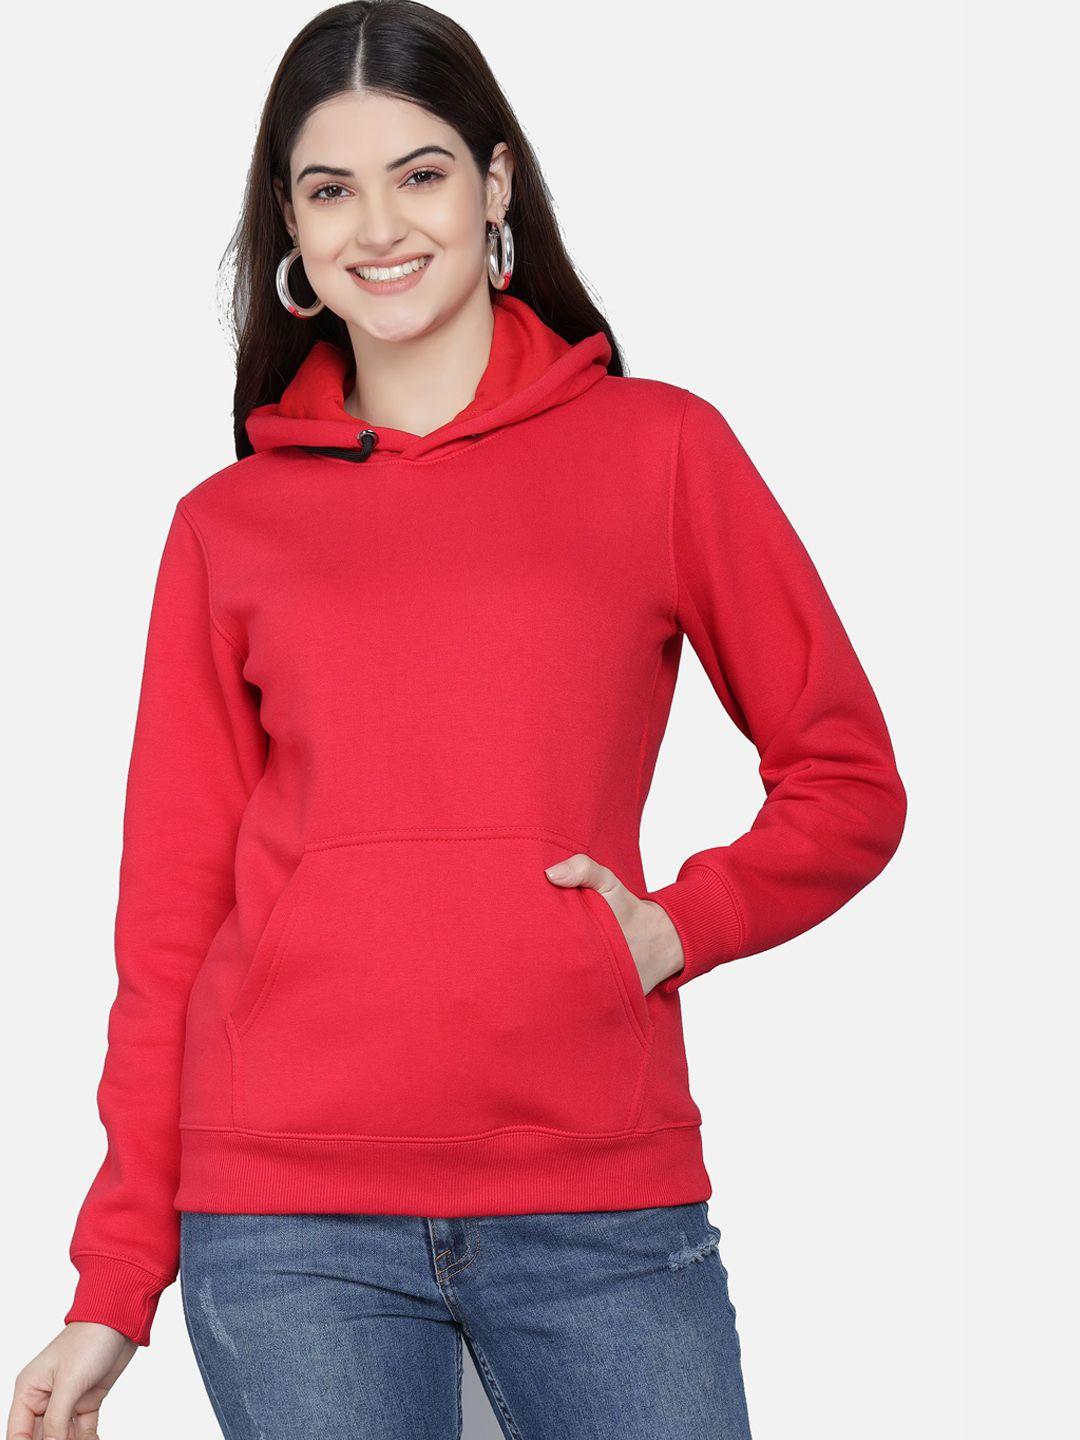 pockman women red hooded sweatshirt